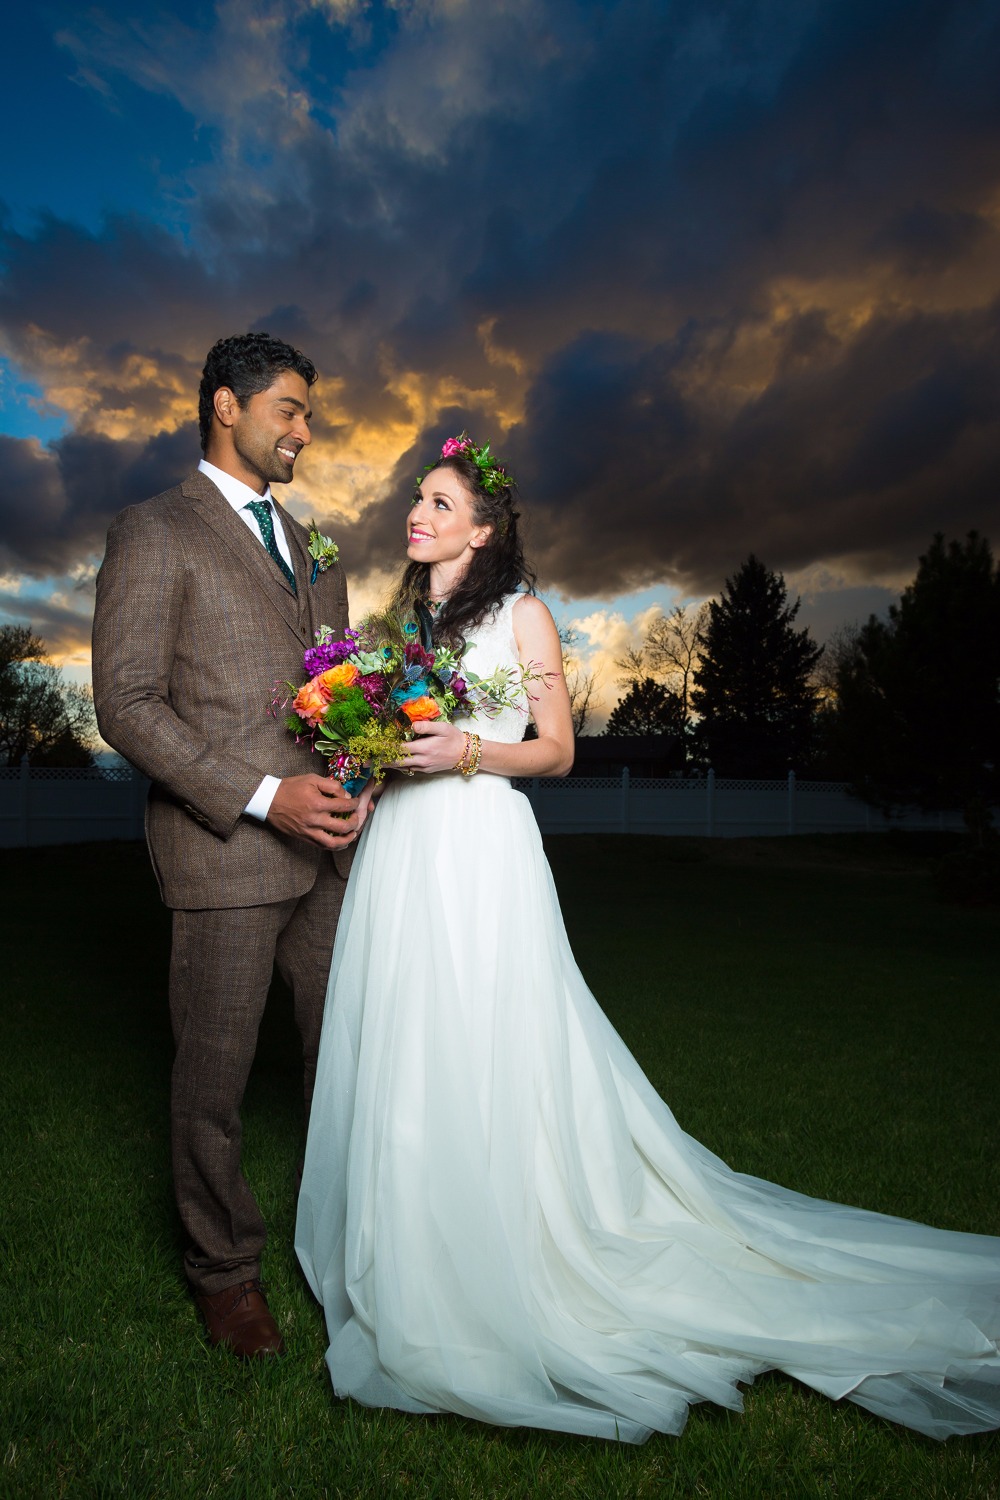 vibrant-ethnic-fusion-wedding-ideas